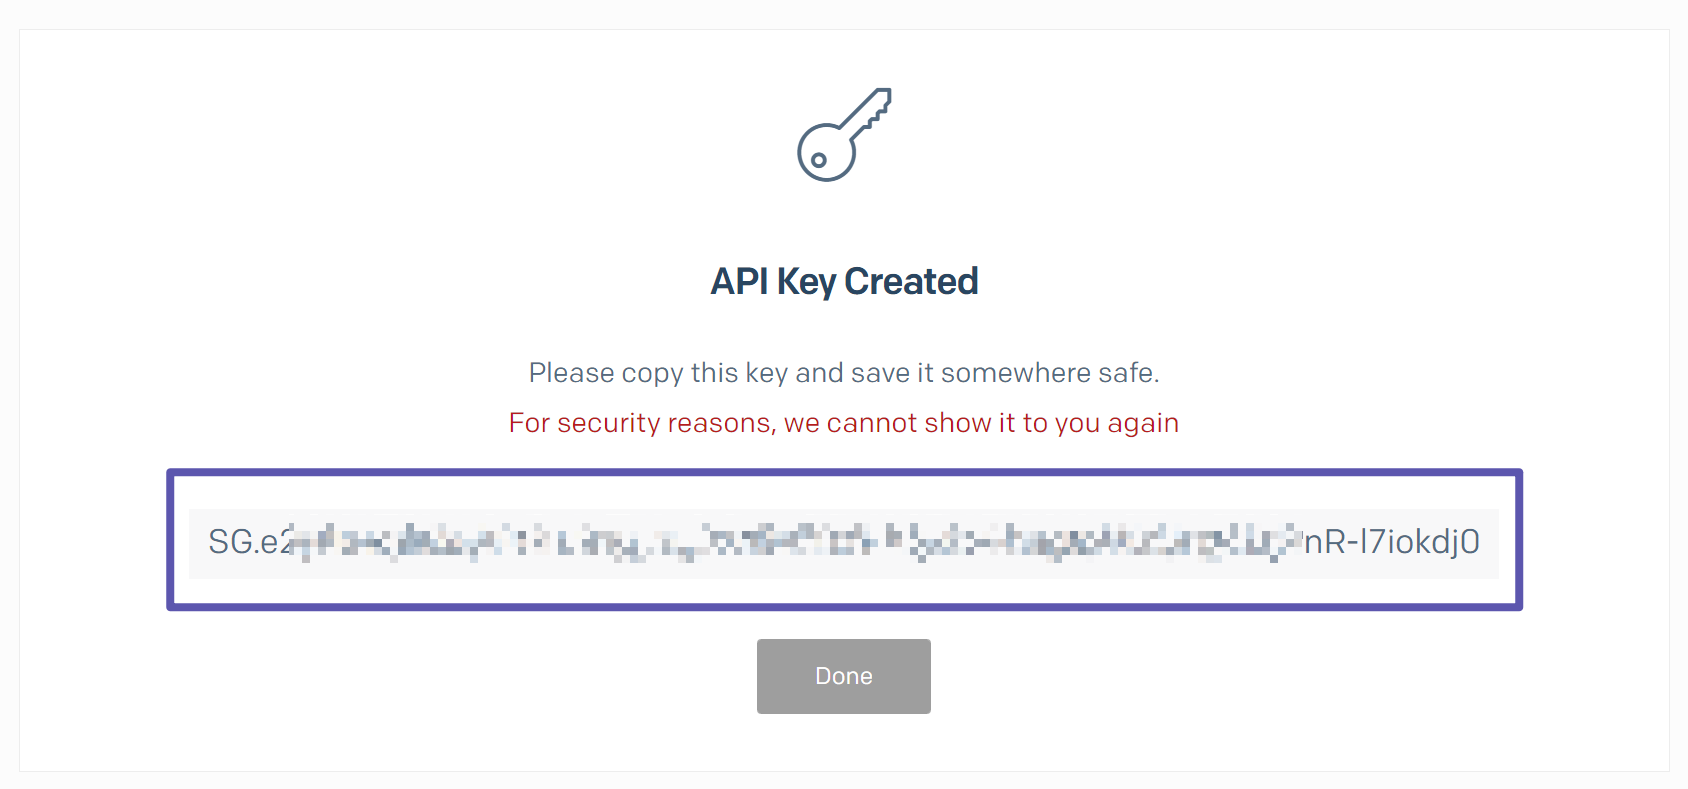 API Key Created